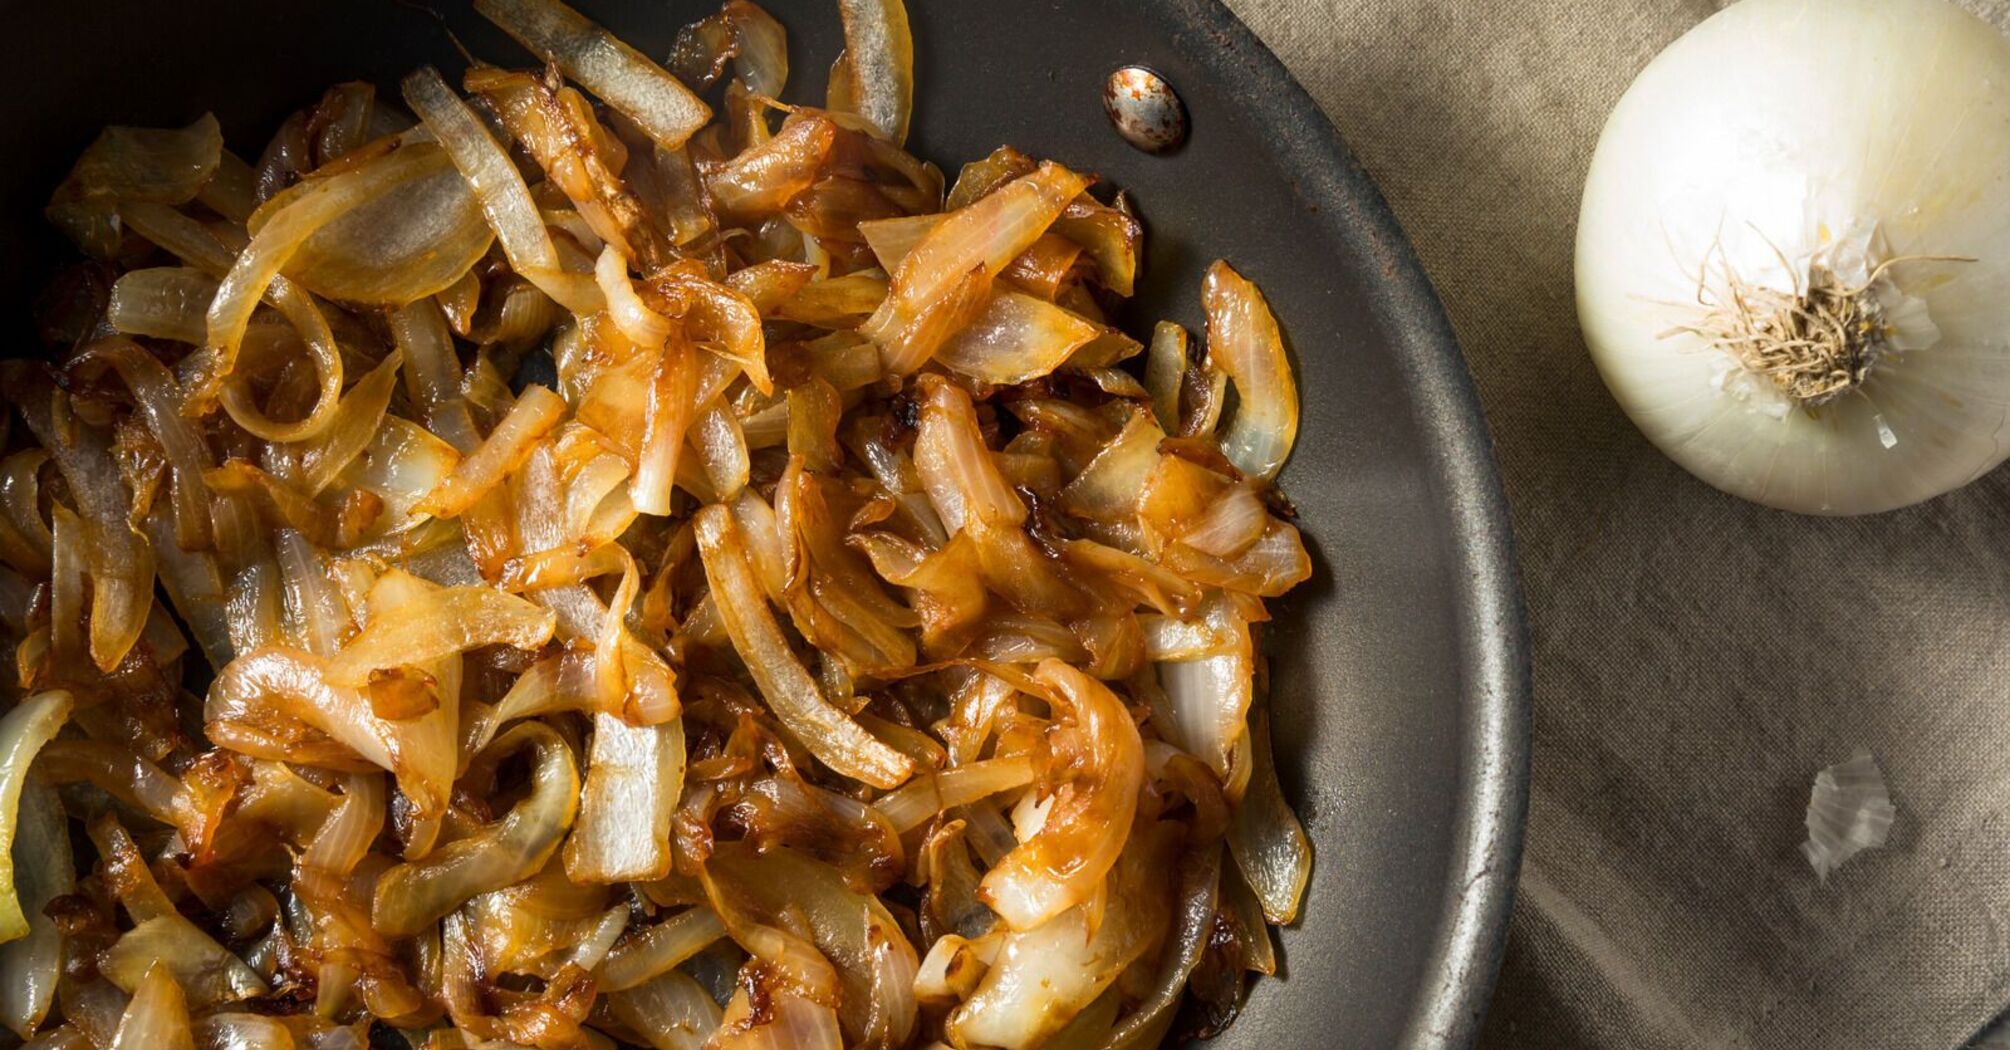 Why add baking soda when frying onions